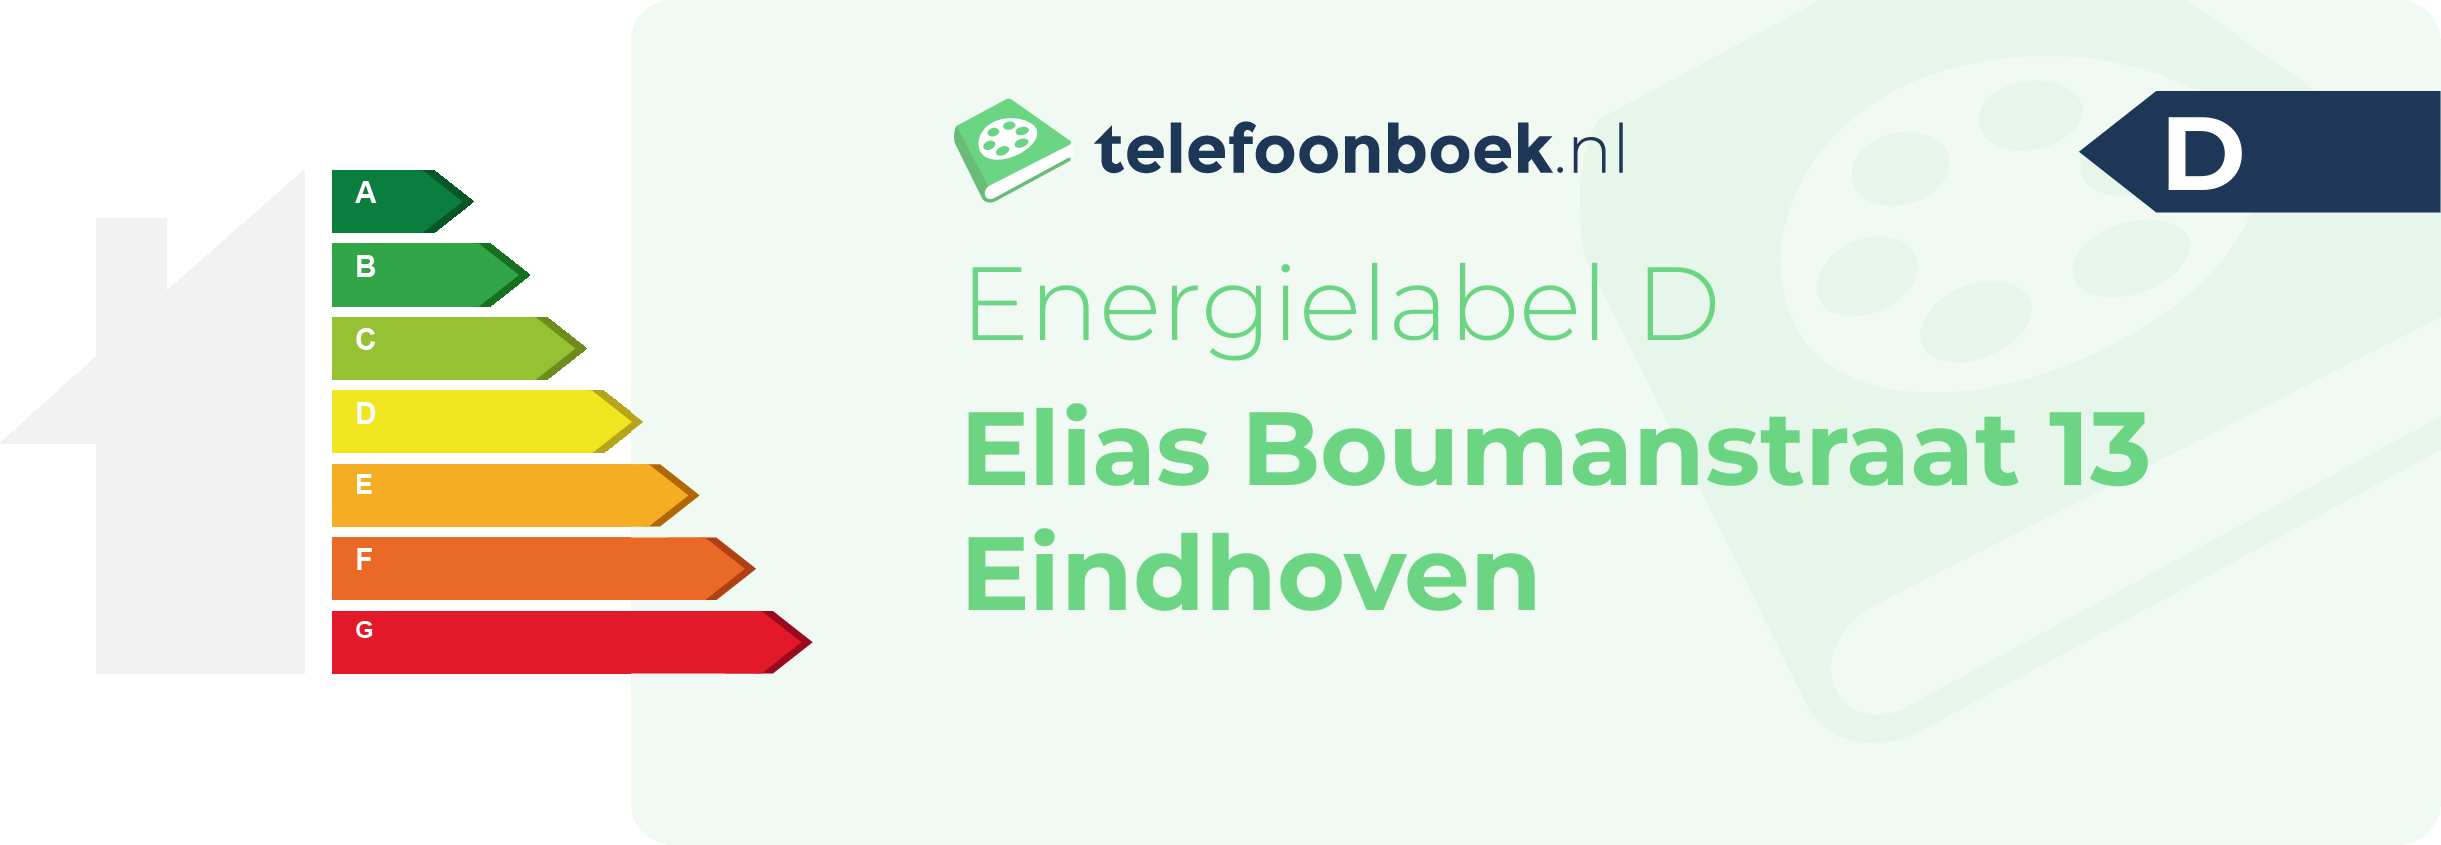 Energielabel Elias Boumanstraat 13 Eindhoven